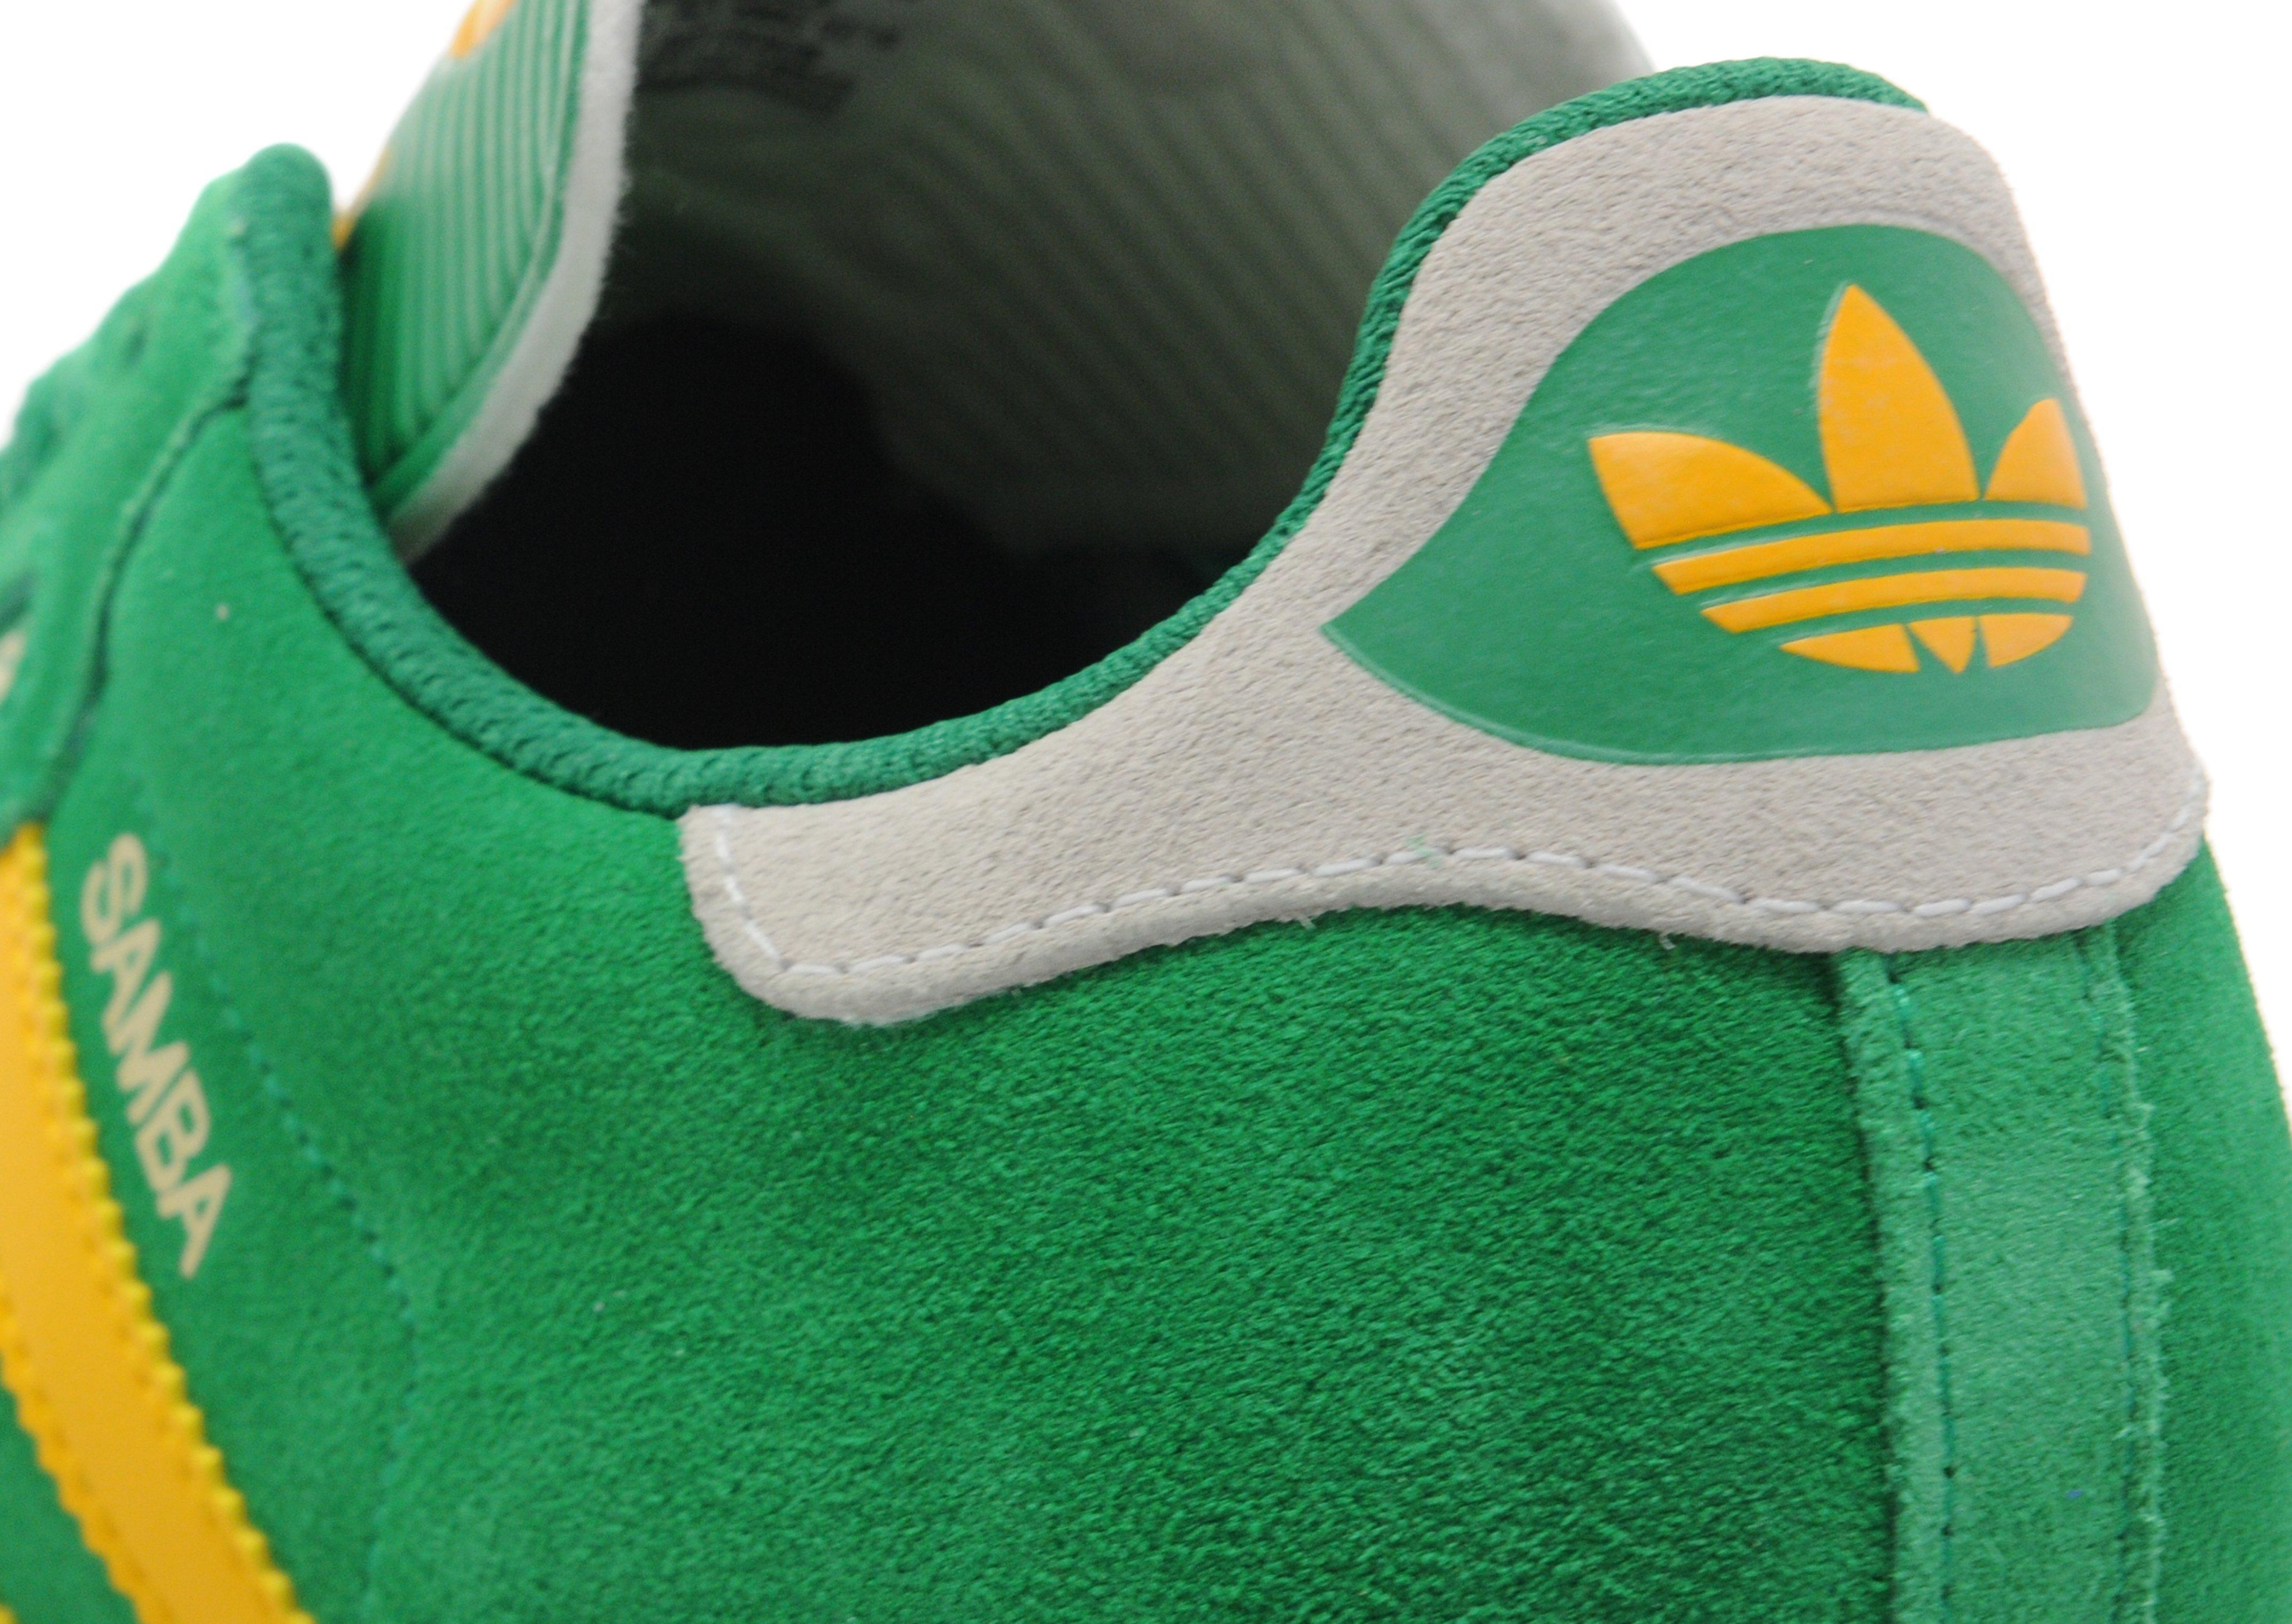 adidas samba super suede green